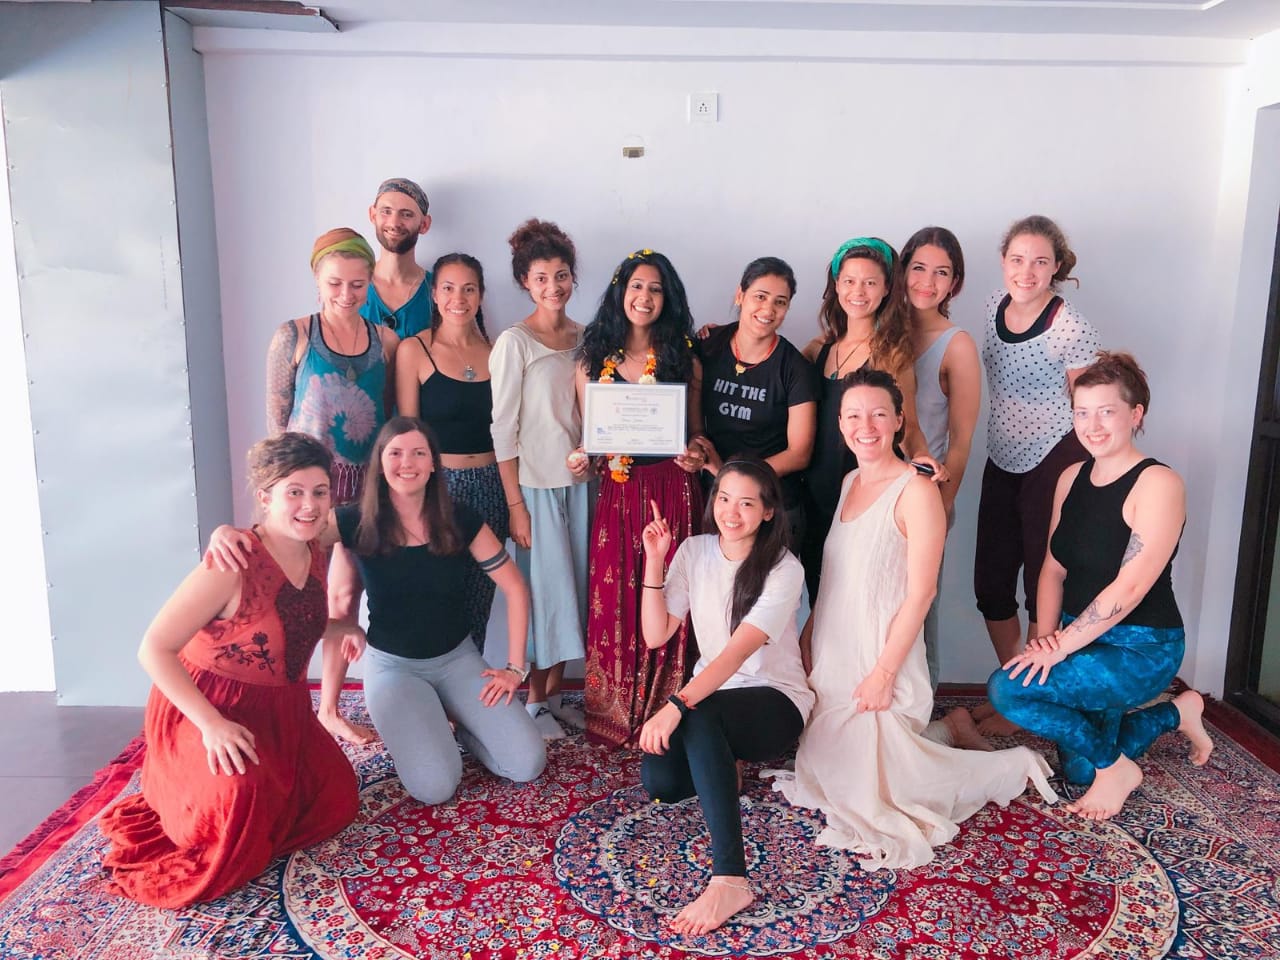 Best 200 Hours Yoga Teacher Training in India | Alakhyog